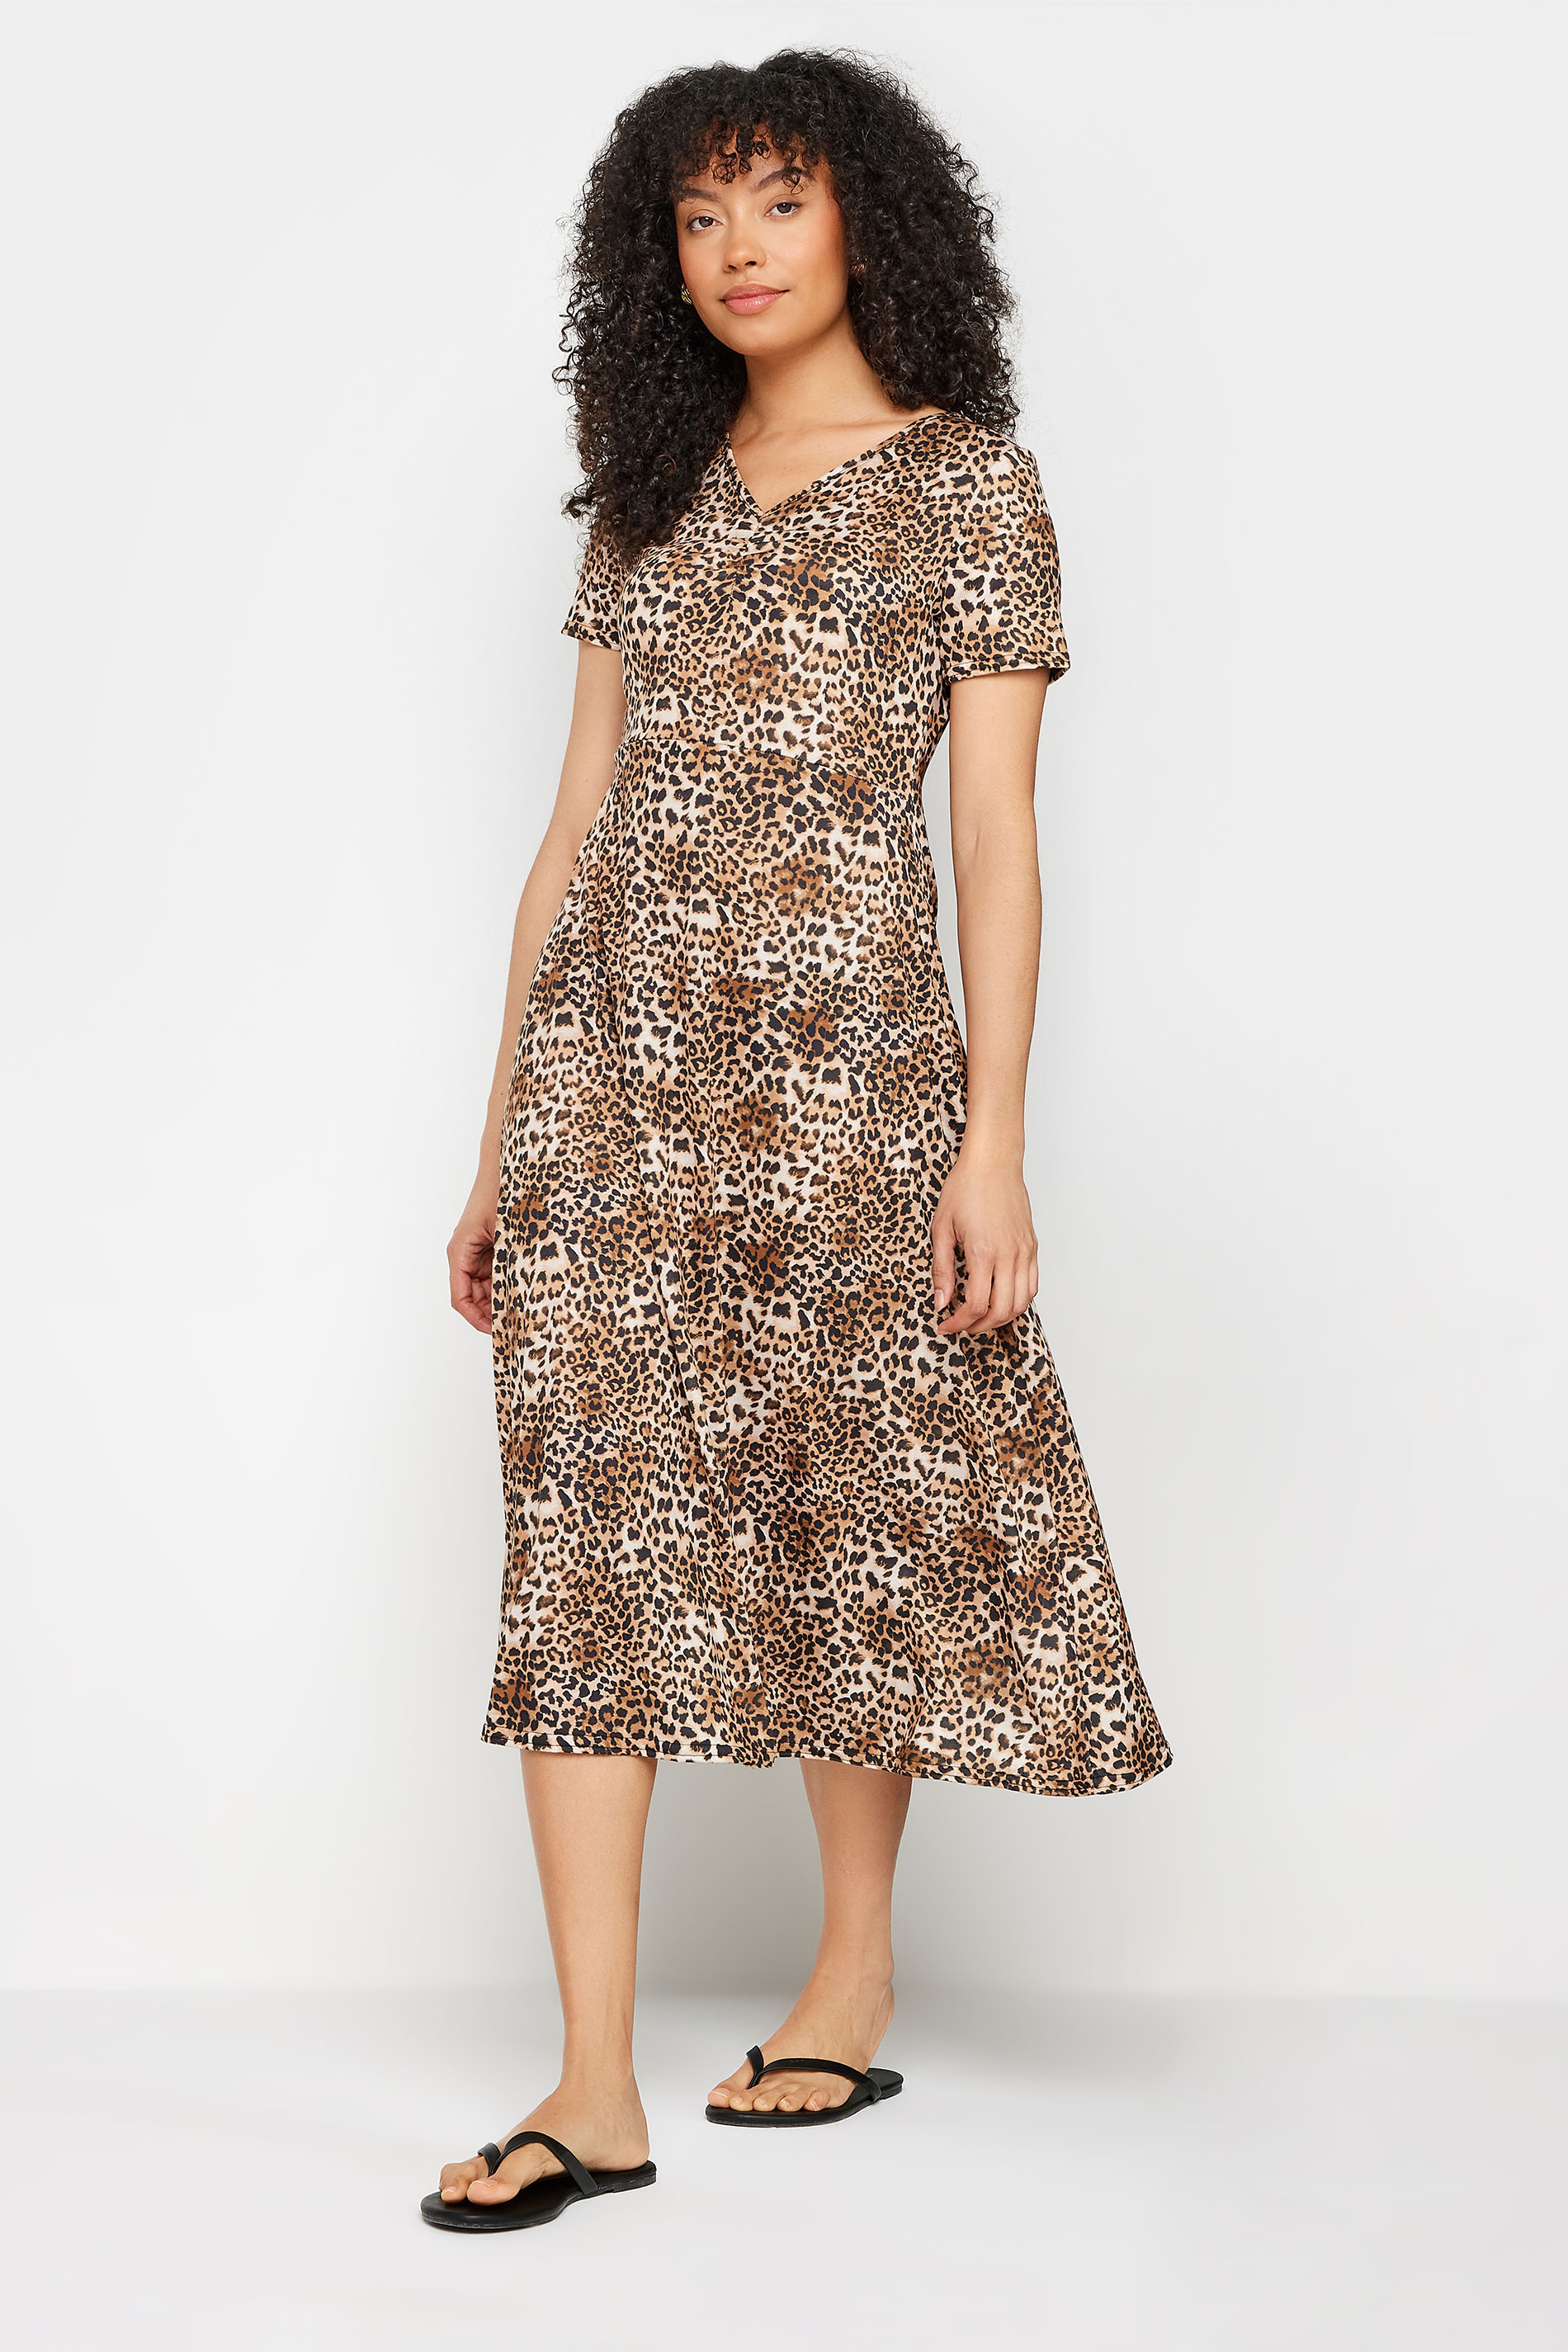 M&Co Brown Leopard Print V-Neck Dress | M&Co 3